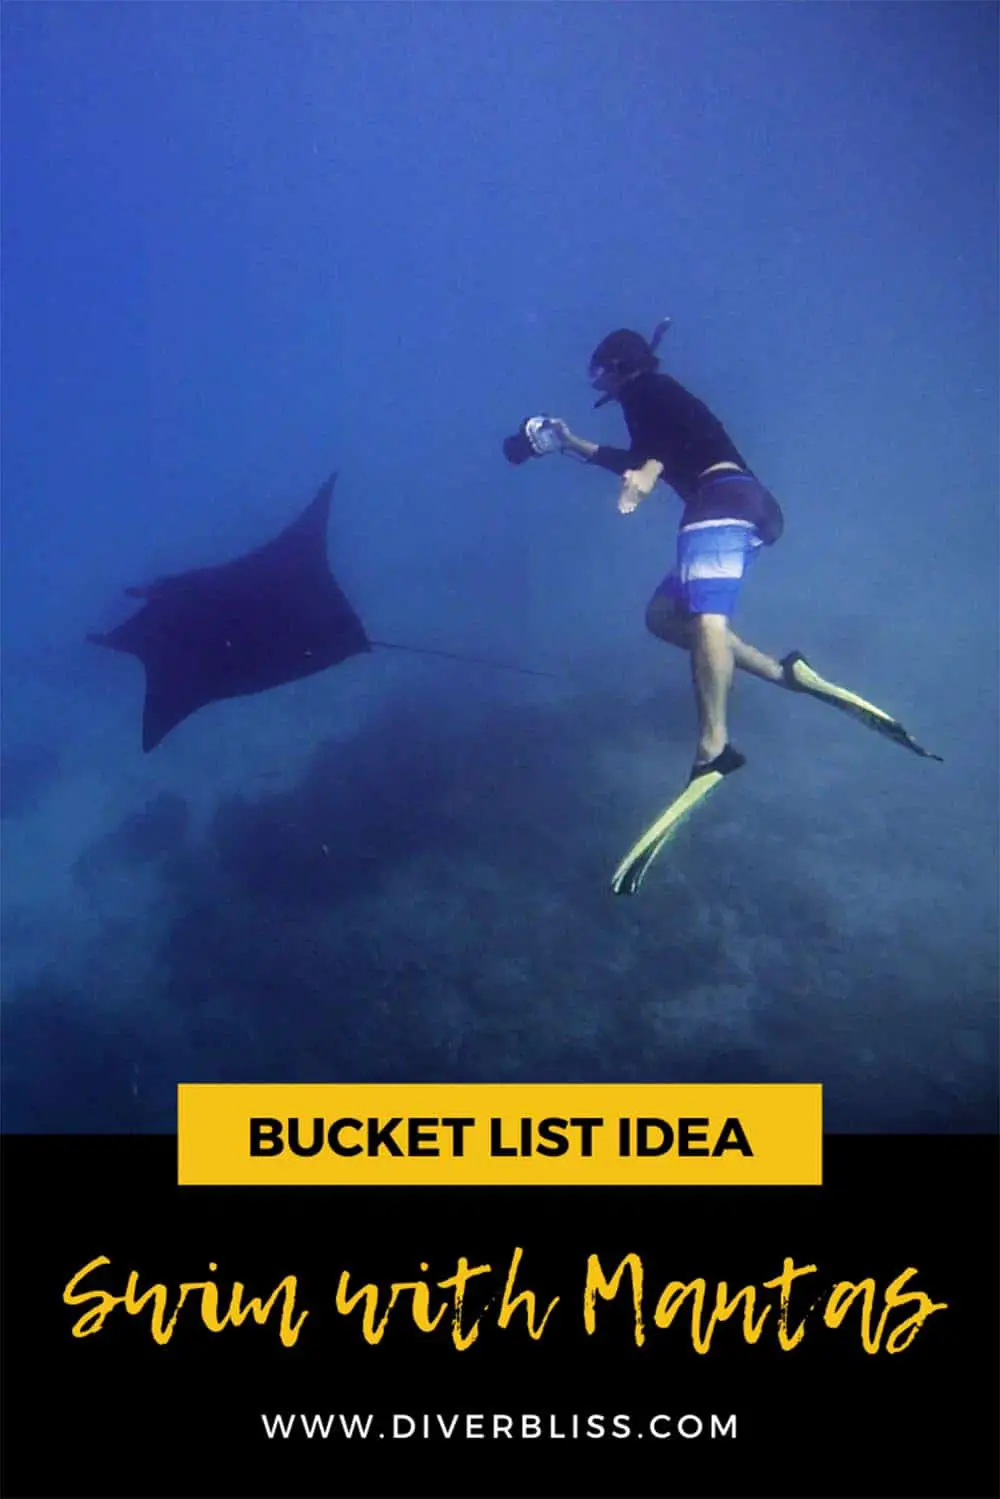 Bucket list Achievement: Swimming with Mantas